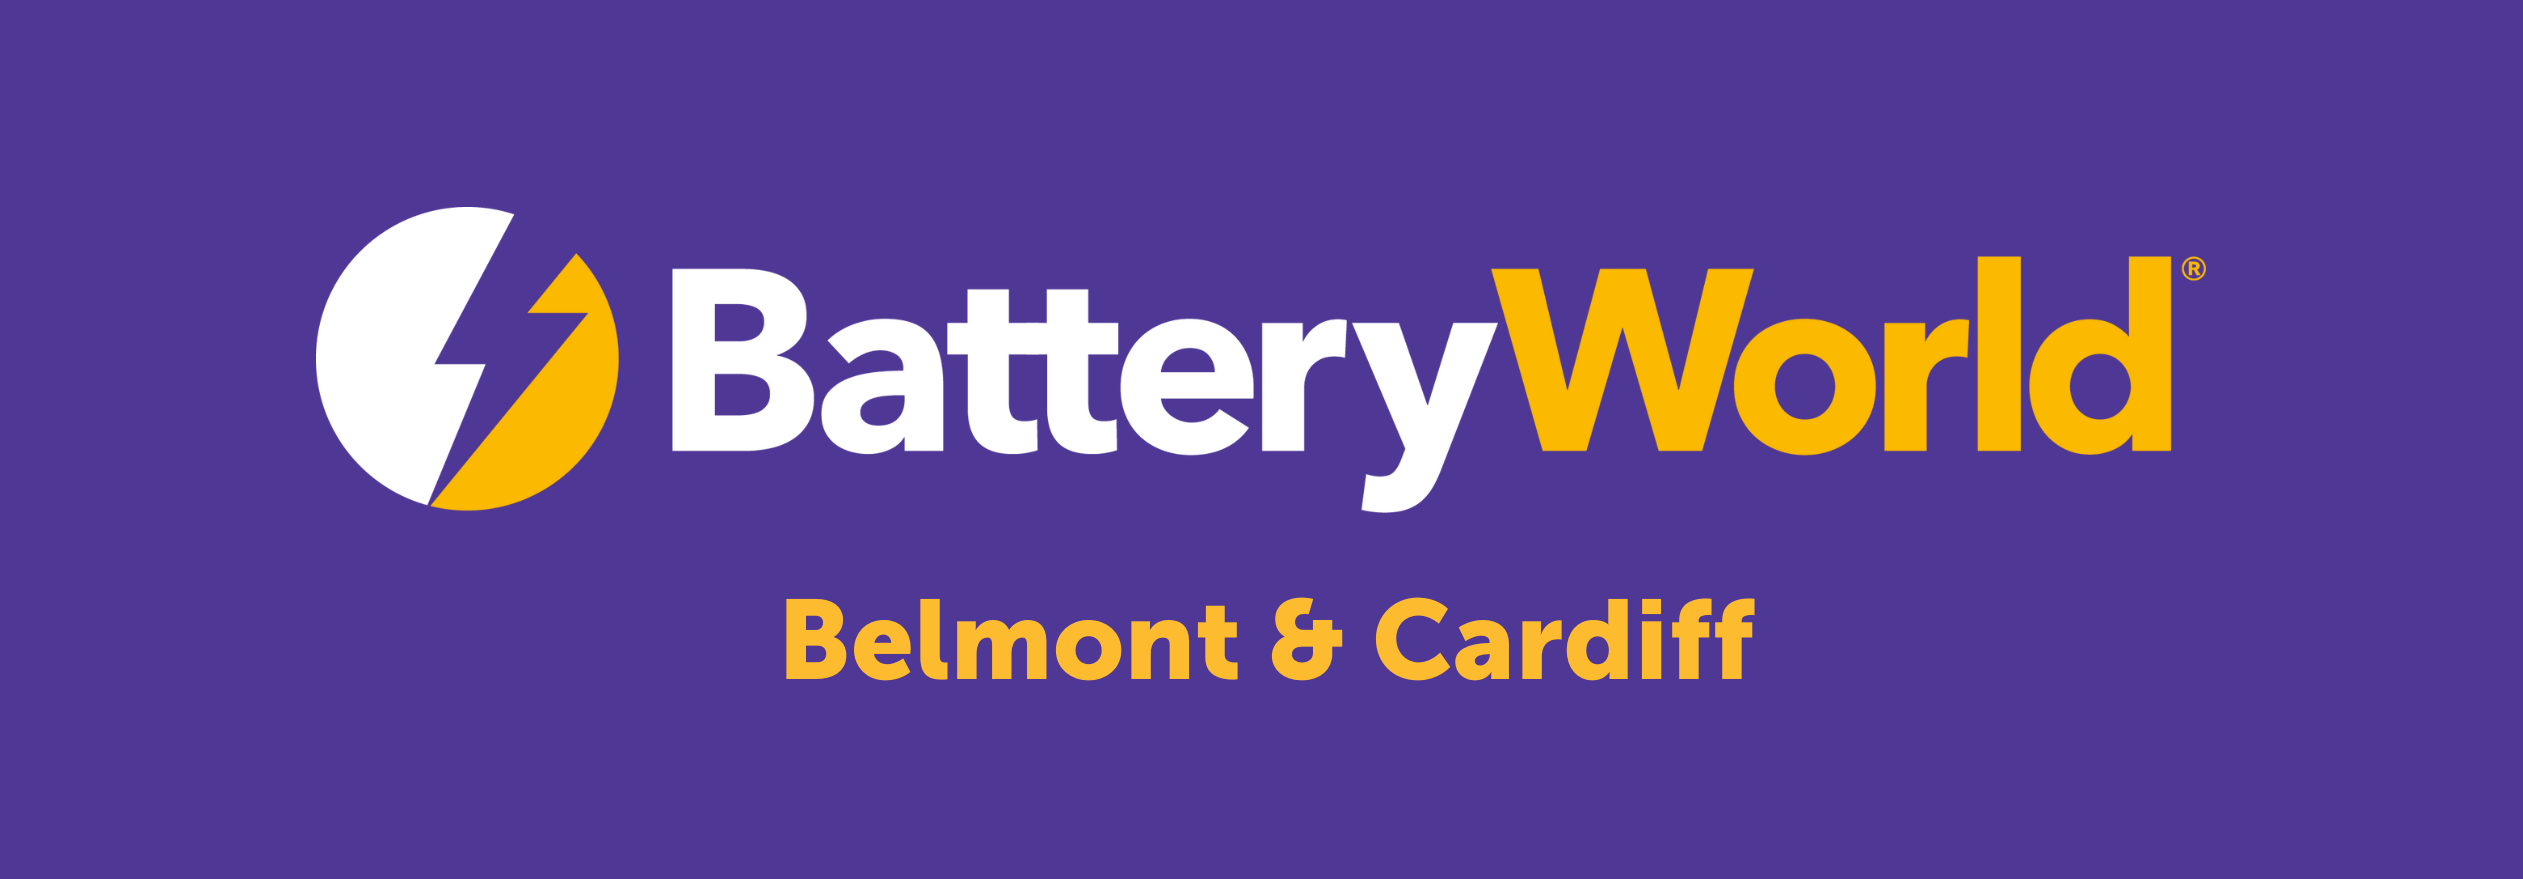 BatteryWorld Belmont & Cardiff Logo